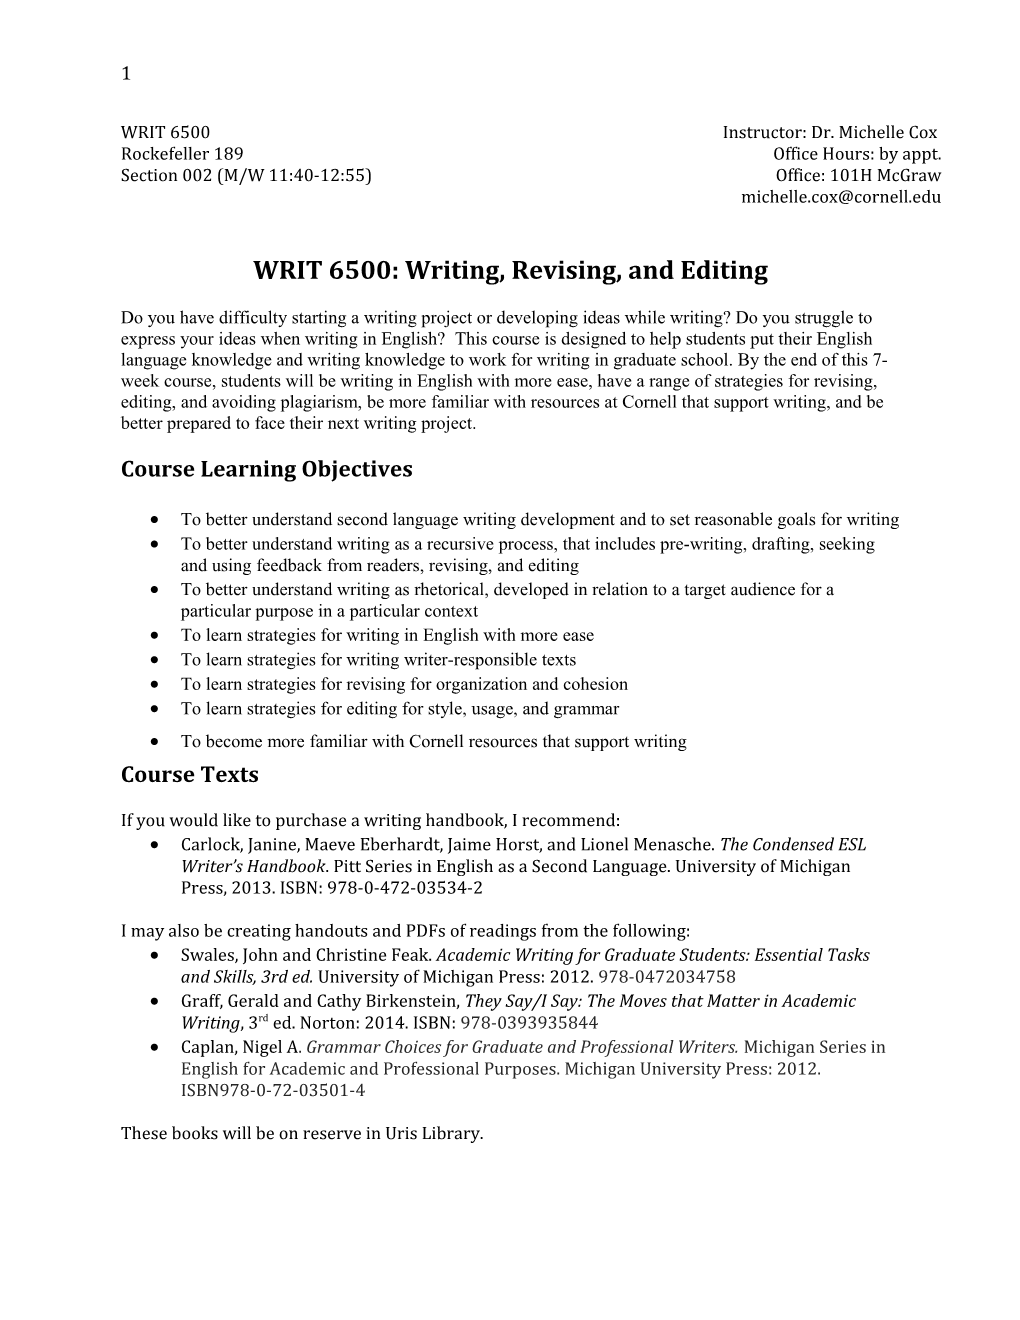 WRIT 6500: Writing, Revising, and Editing